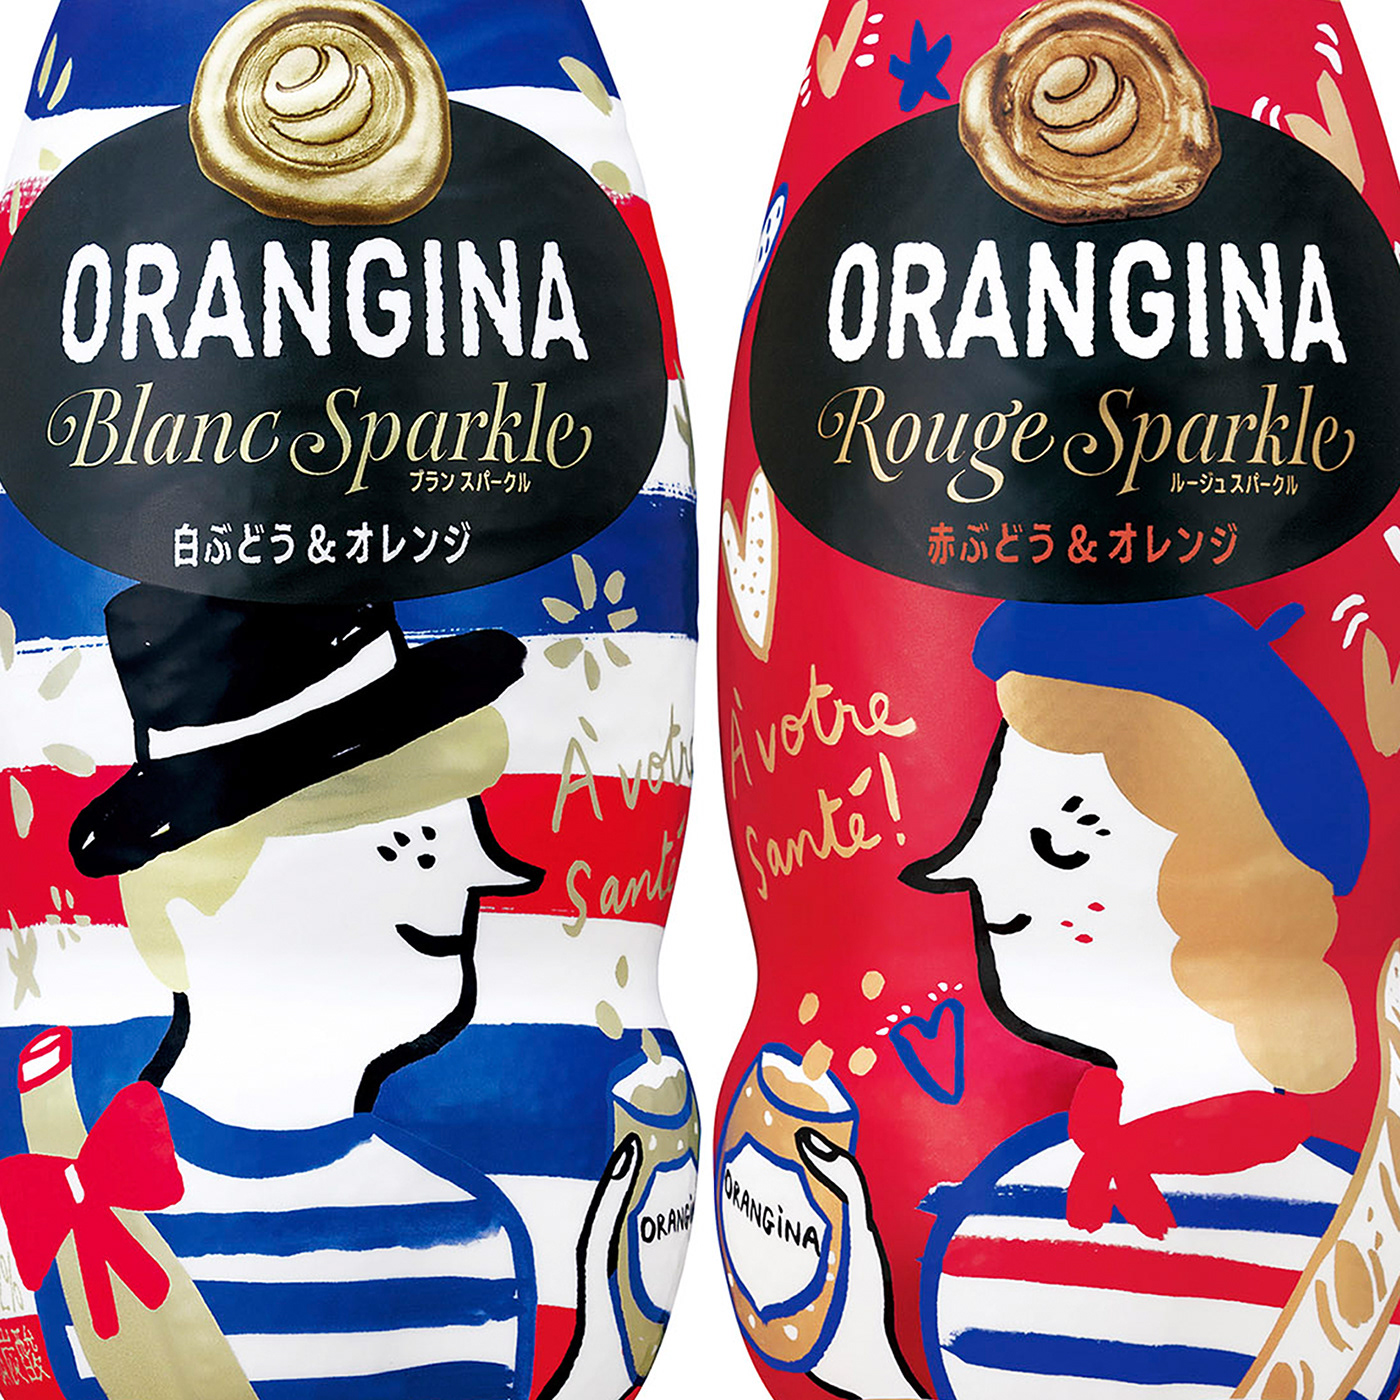 wine soda beaujolais nouveau france japan ILLUSTRATION  packagedesign Orangina Fruit sparkling